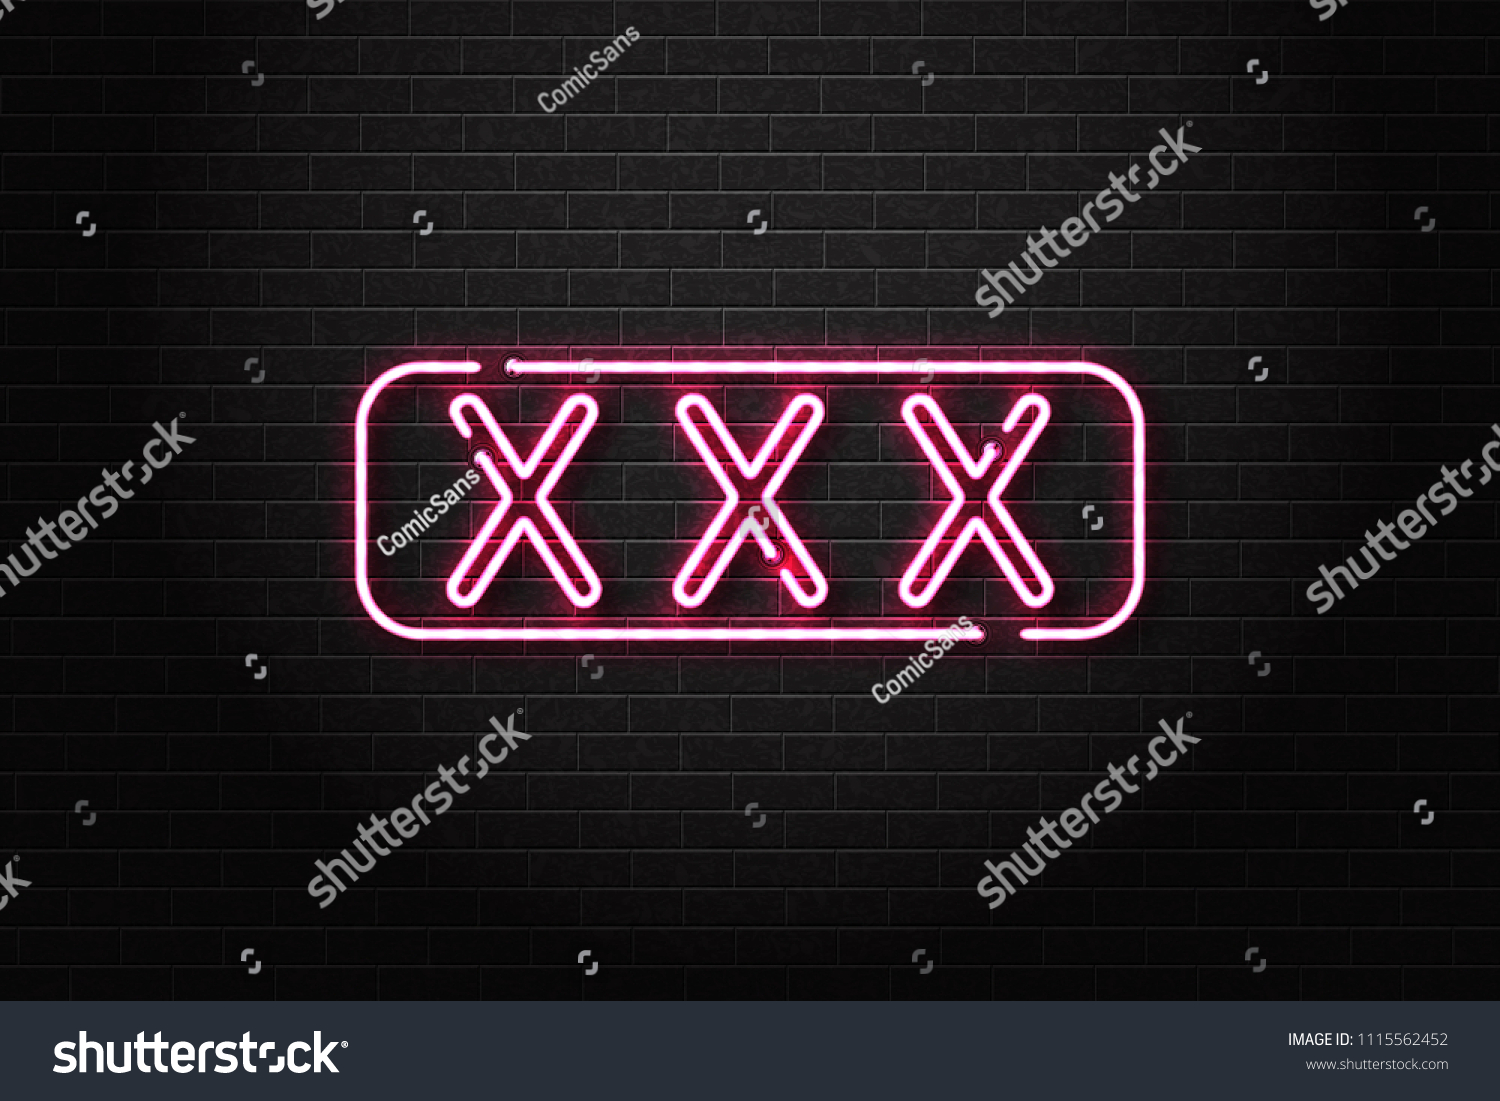 Vector Realistic Isolated Neon Sign Xxx Vetor Stock Livre De Direitos 1115562452 Shutterstock 